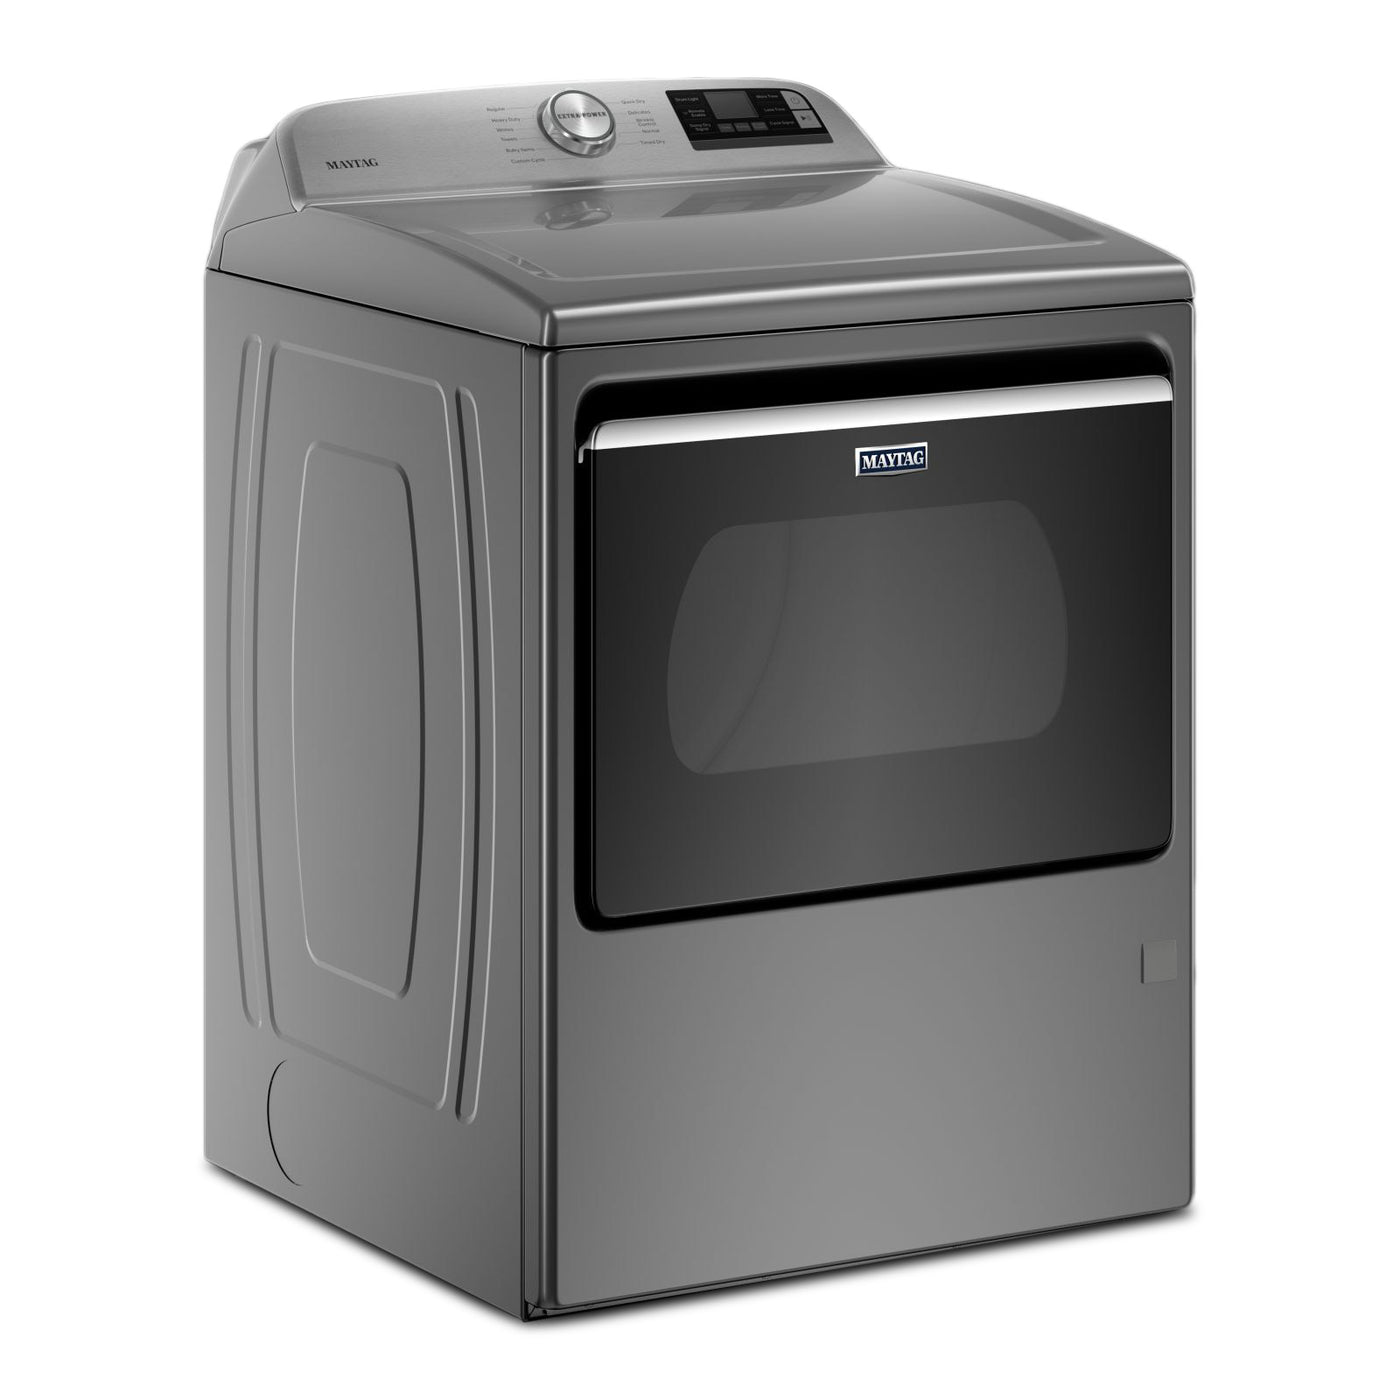 Maytag Metallic Slate Smart Gas Dryer with Steam (7.4 cu.ft.) - MGD7230HC